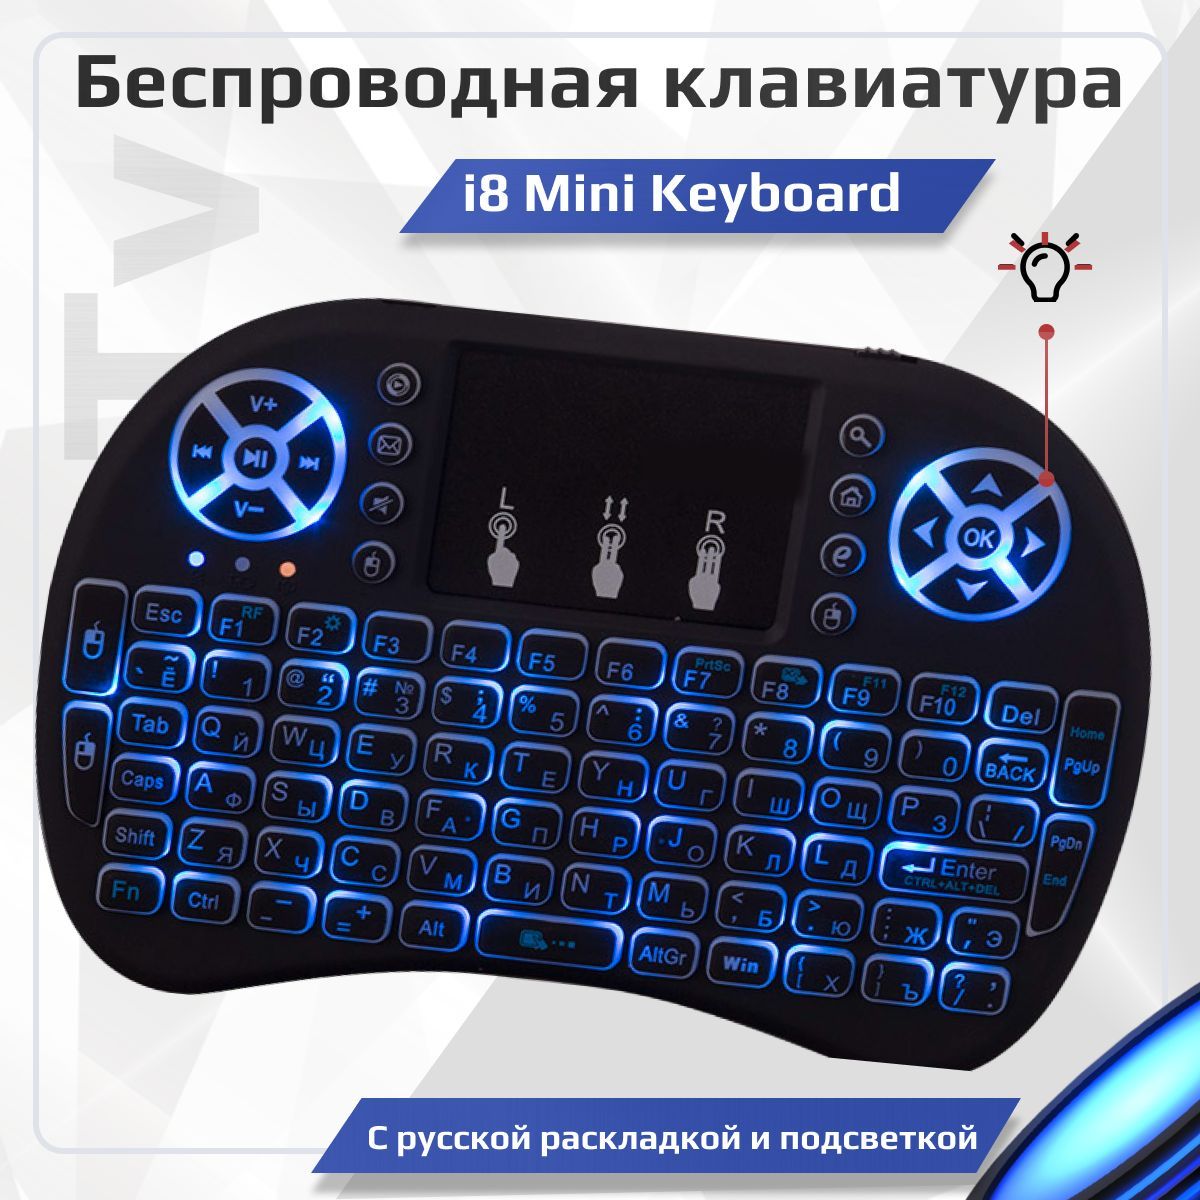 БеспроводнаяМиниклавиатураi8MiniKeyboardстачпадомрусскойраскладкойподсветкойиаккумулятором